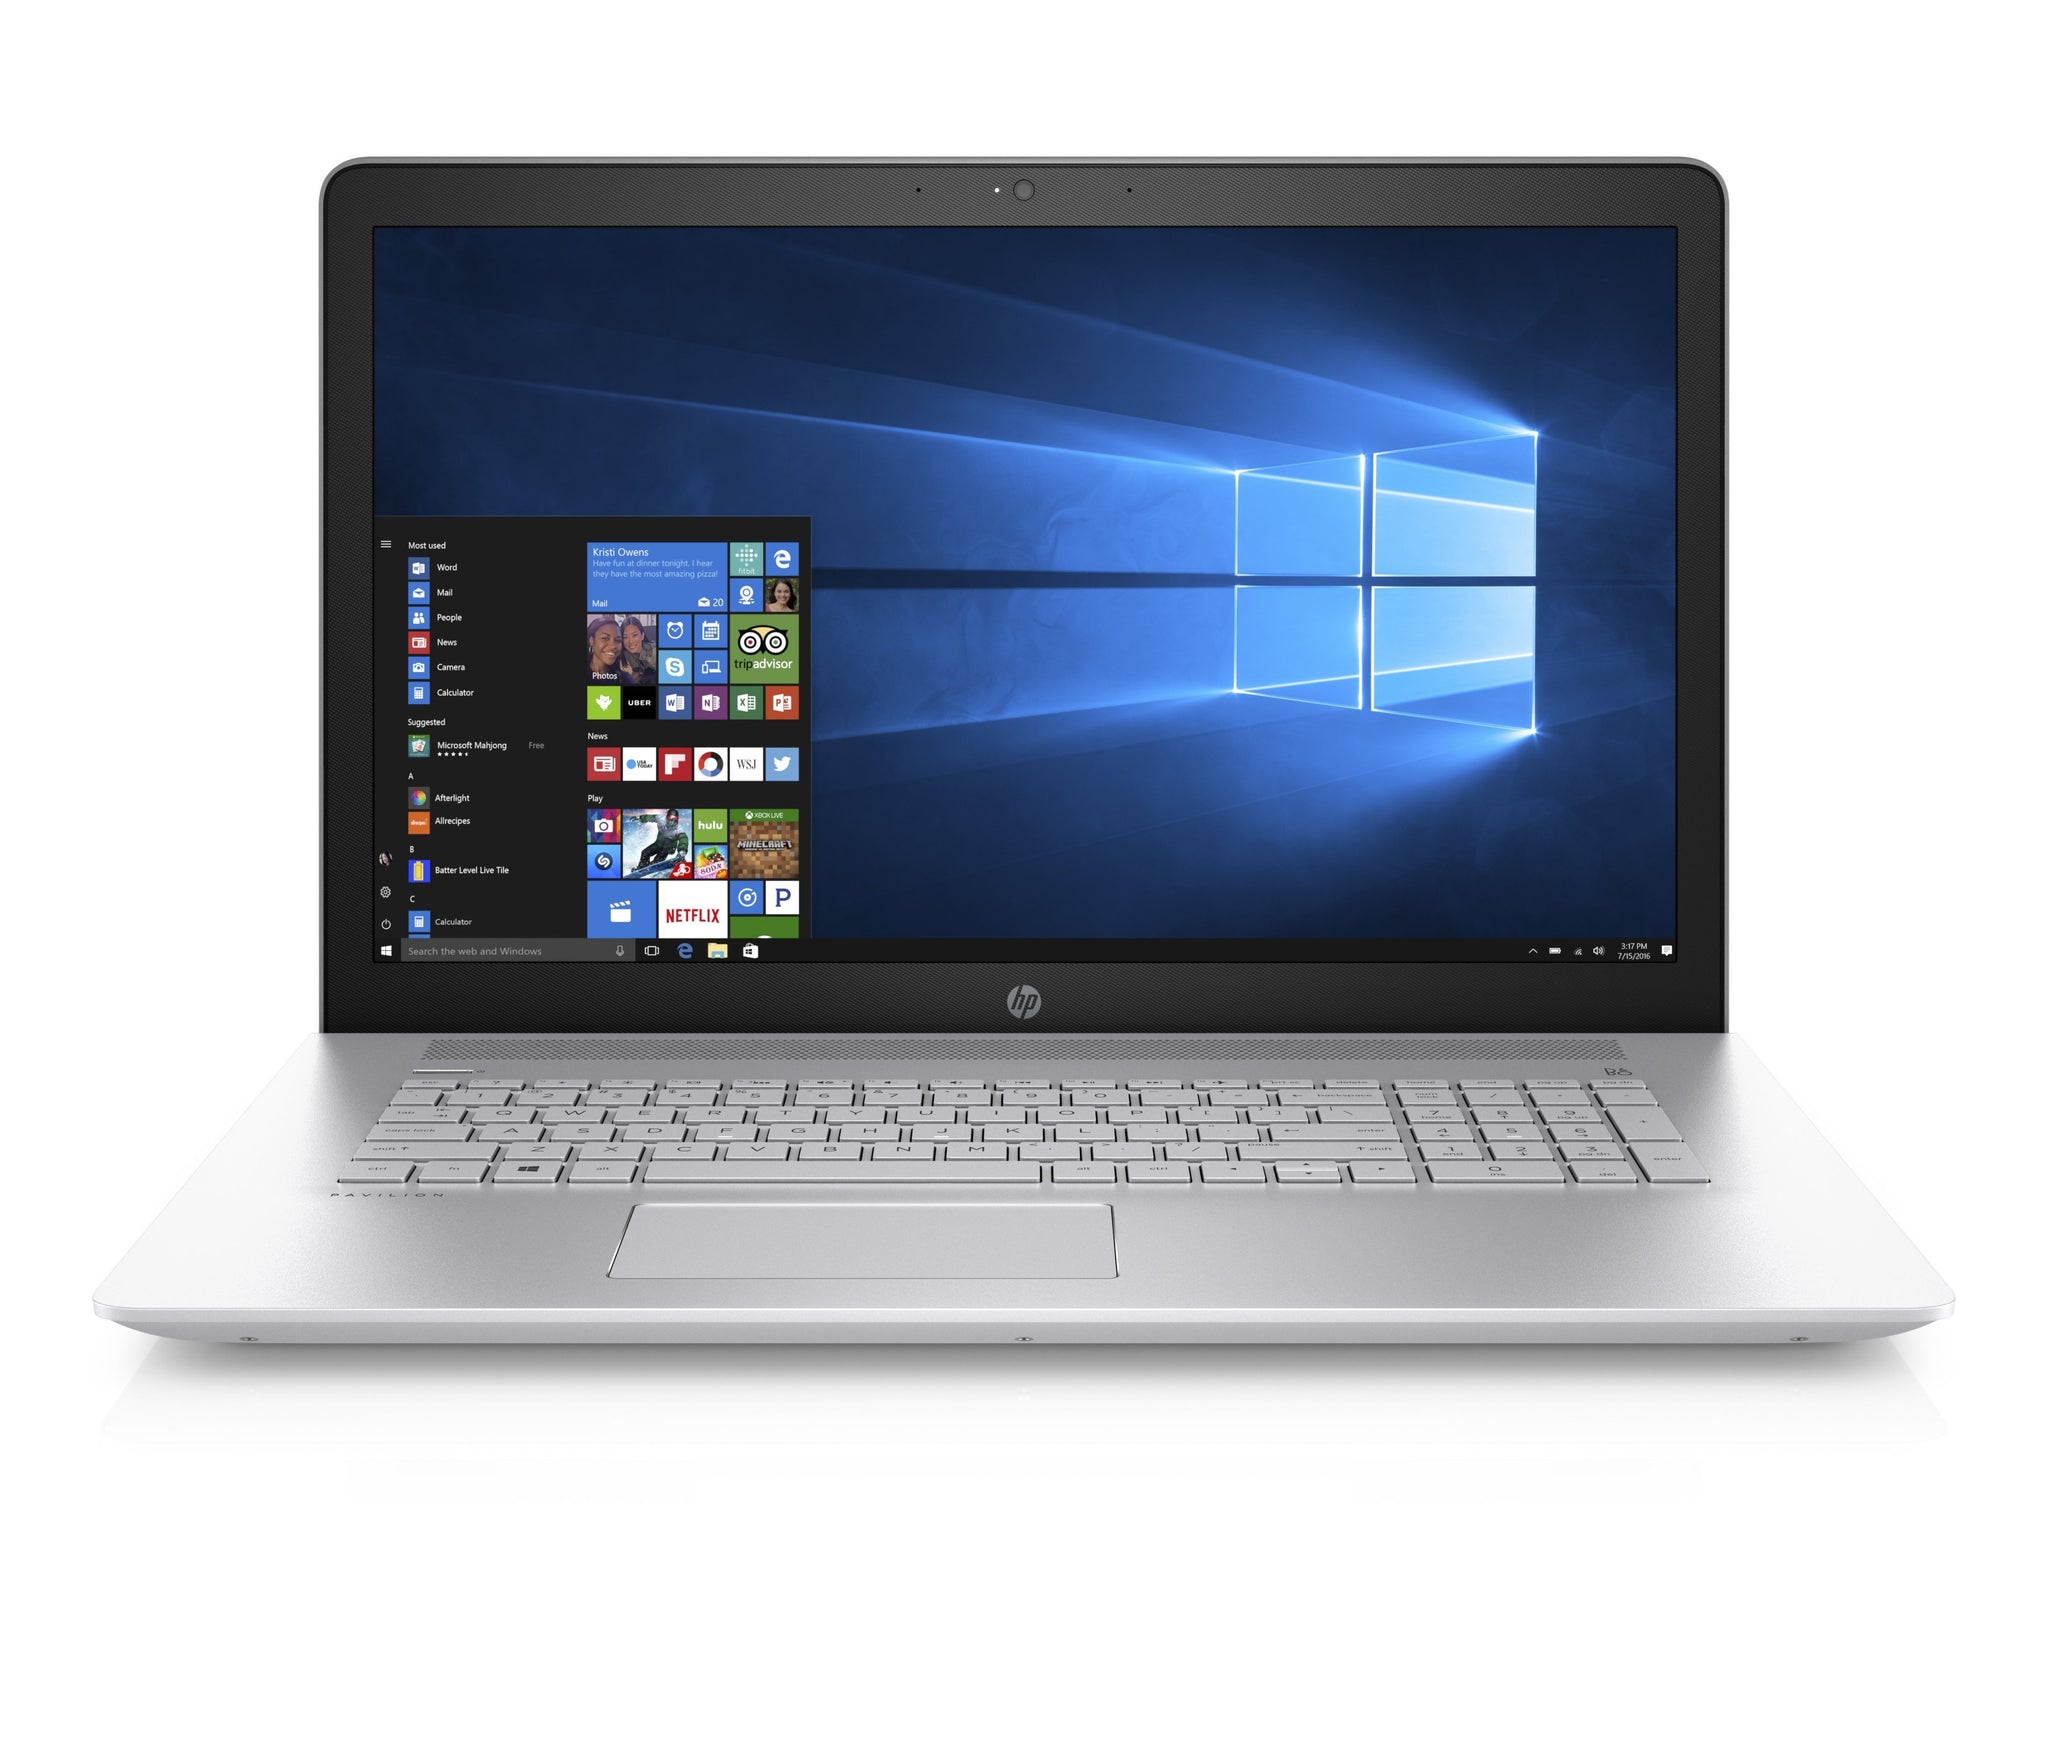 Certified Refurbished HP 17-ar050wm, 17.3" Laptop, Windows 10 Home, AMD A10-9620P QC, 8GB RAM, 1TB HDD